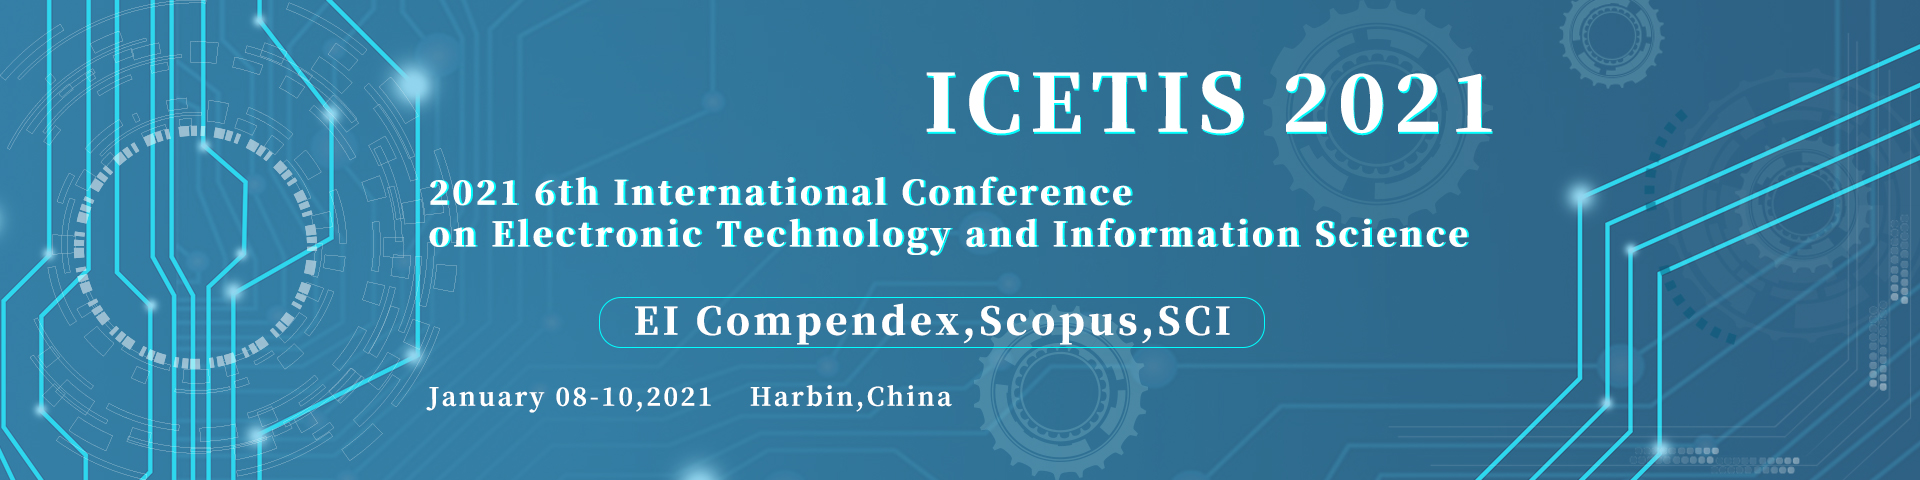 ICETIS 2021-官网banner英版-何霞丽-0831.jpg